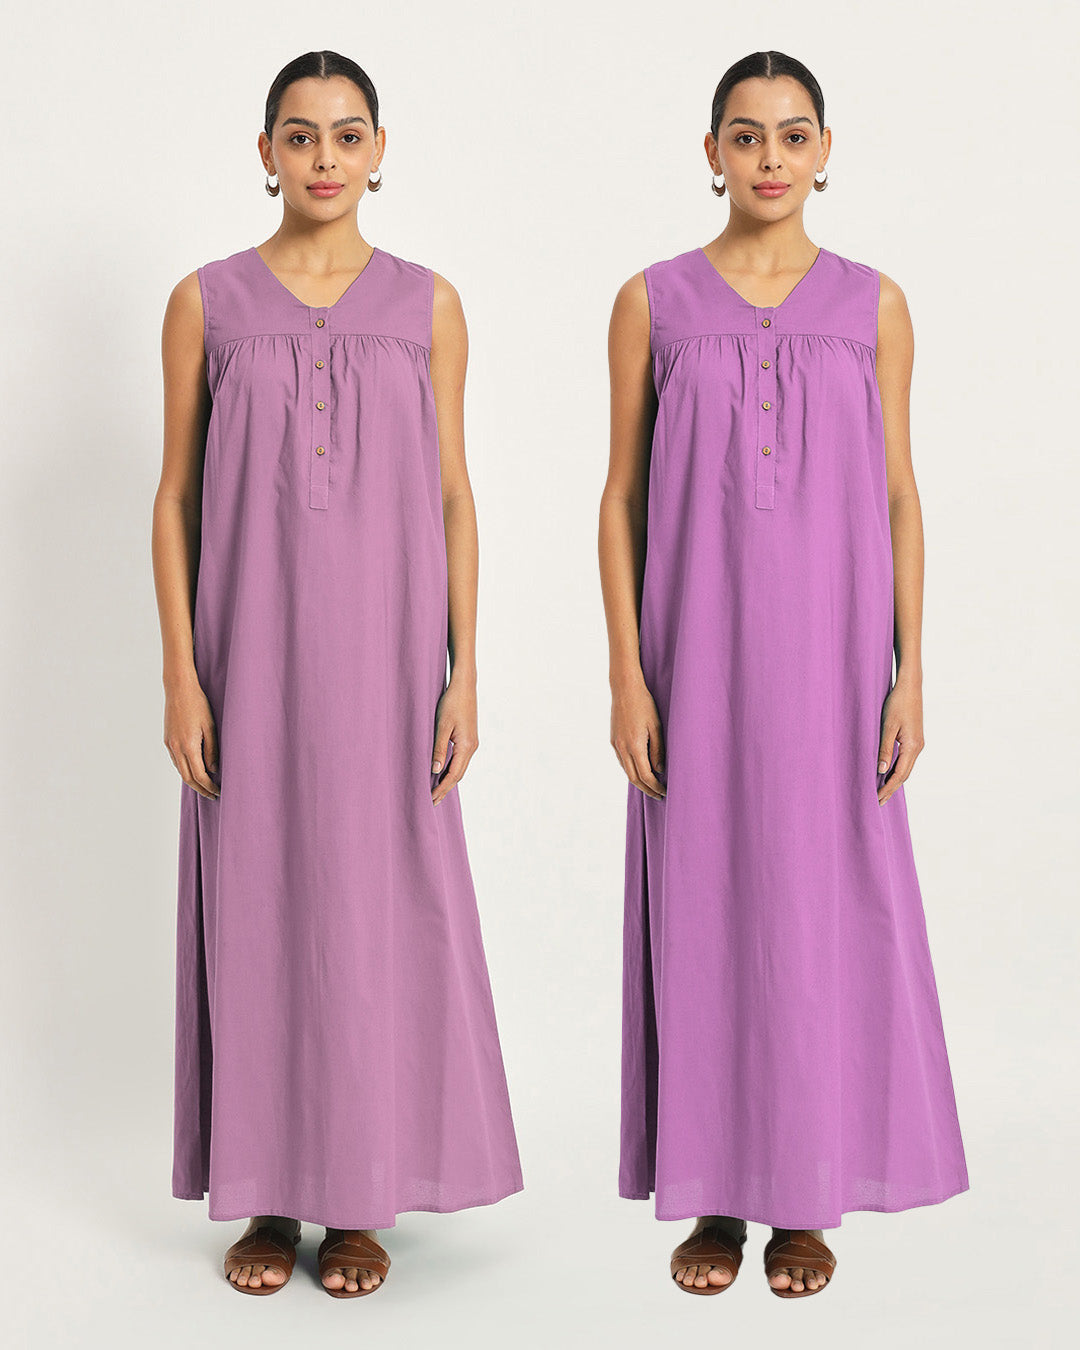 Combo: Iris Pink & Wisteria Purple Restful Retreat Nightdress